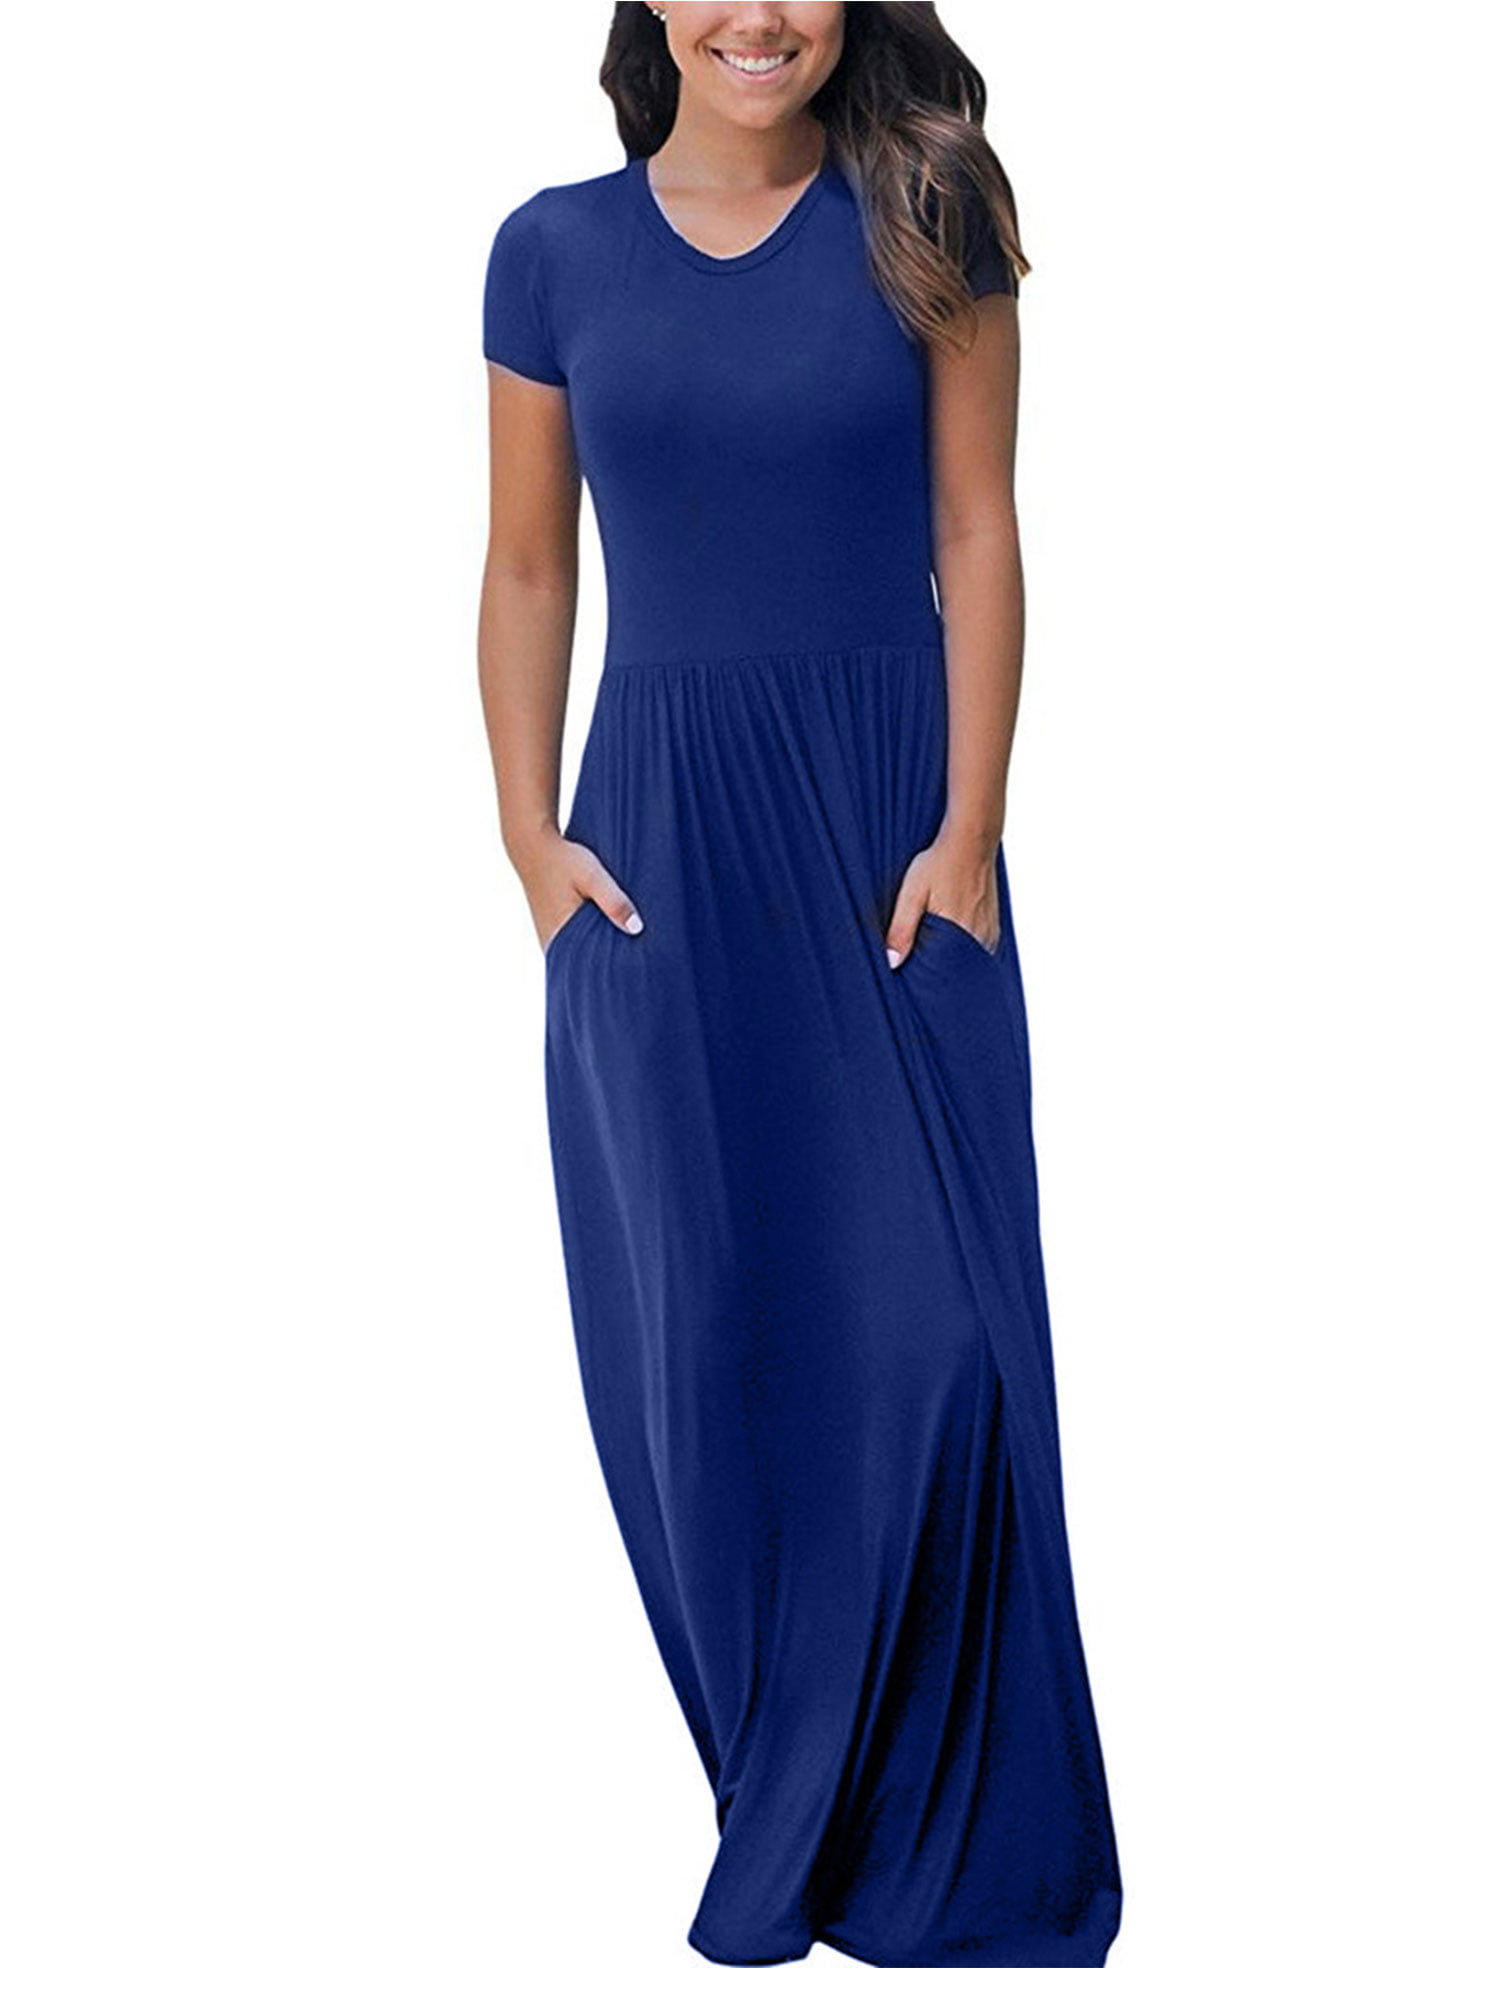 S-3XL Woman Casual Loose Dresses Plus Size Long Plain Color Dresses Retro O Neck Short Sleeved Beach Sundresses 